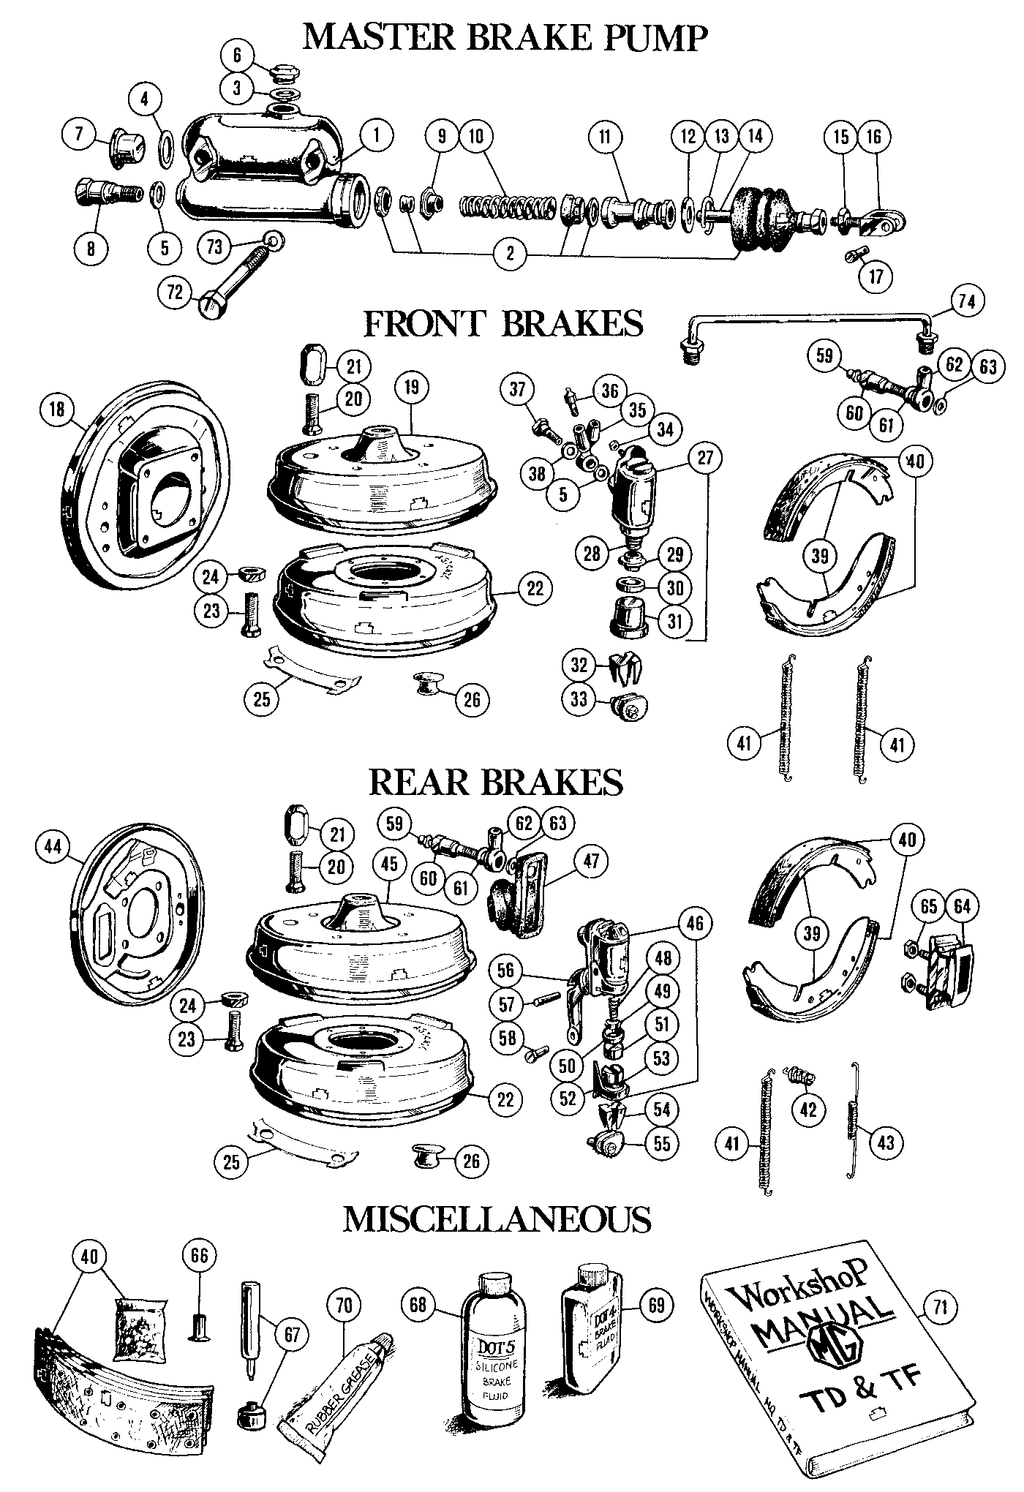 MGTD-TF 1949-1955 - Brake fluids | Webshop Anglo Parts - Brakes - 1